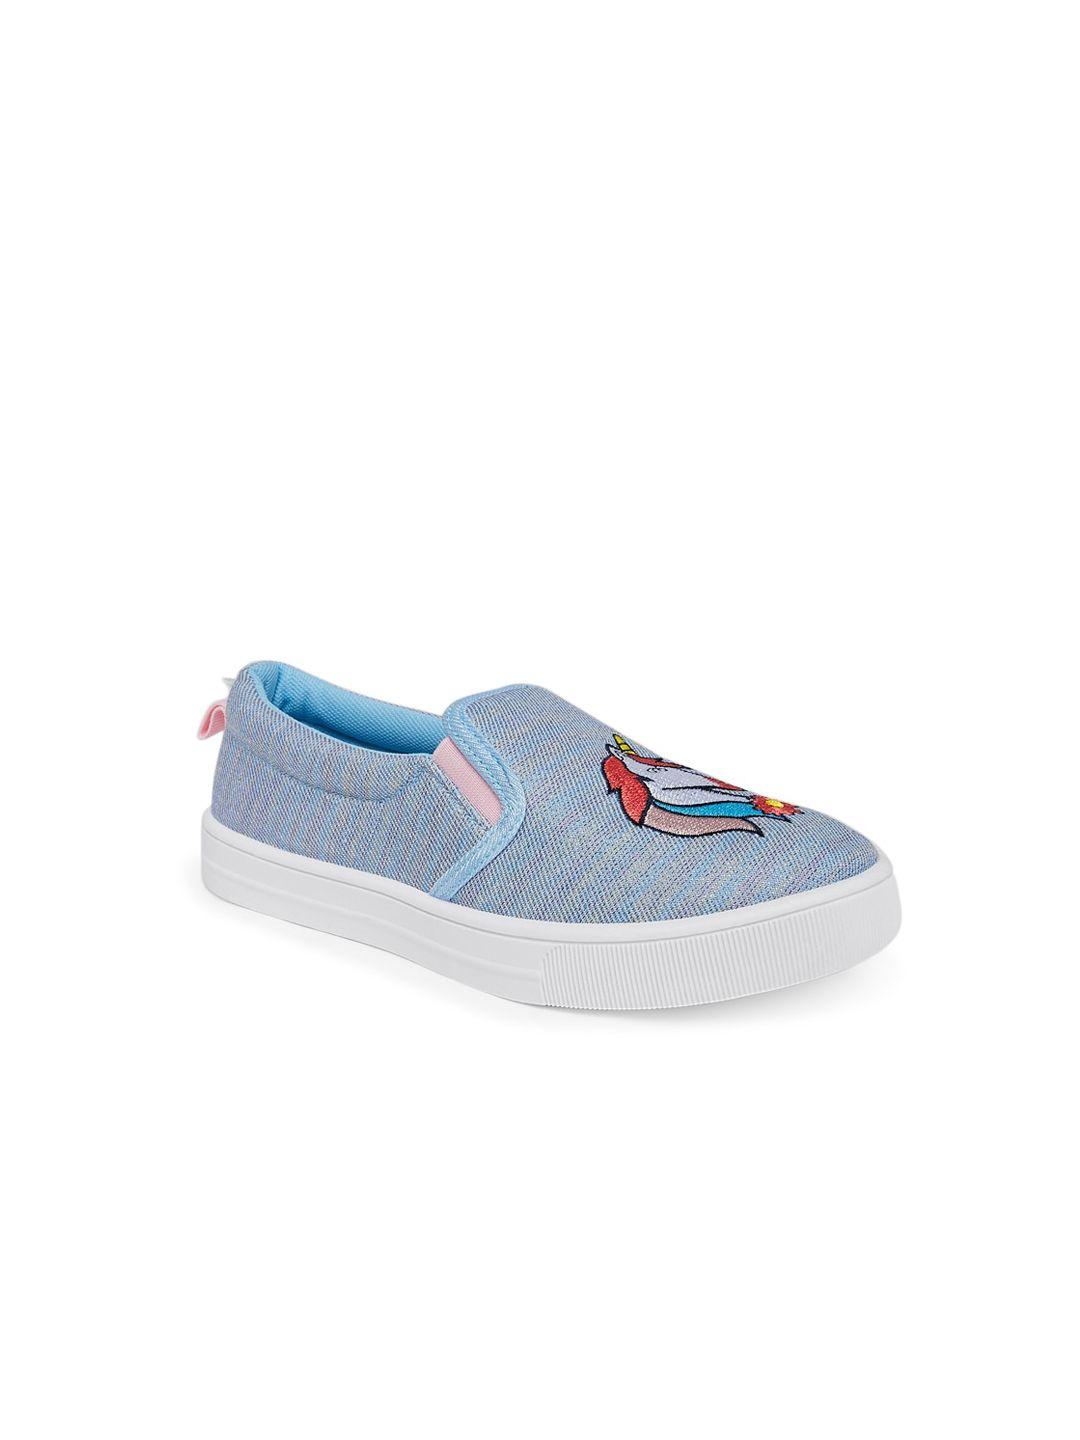 pantaloons junior girls blue printed pu slip-on embroidered sneakers